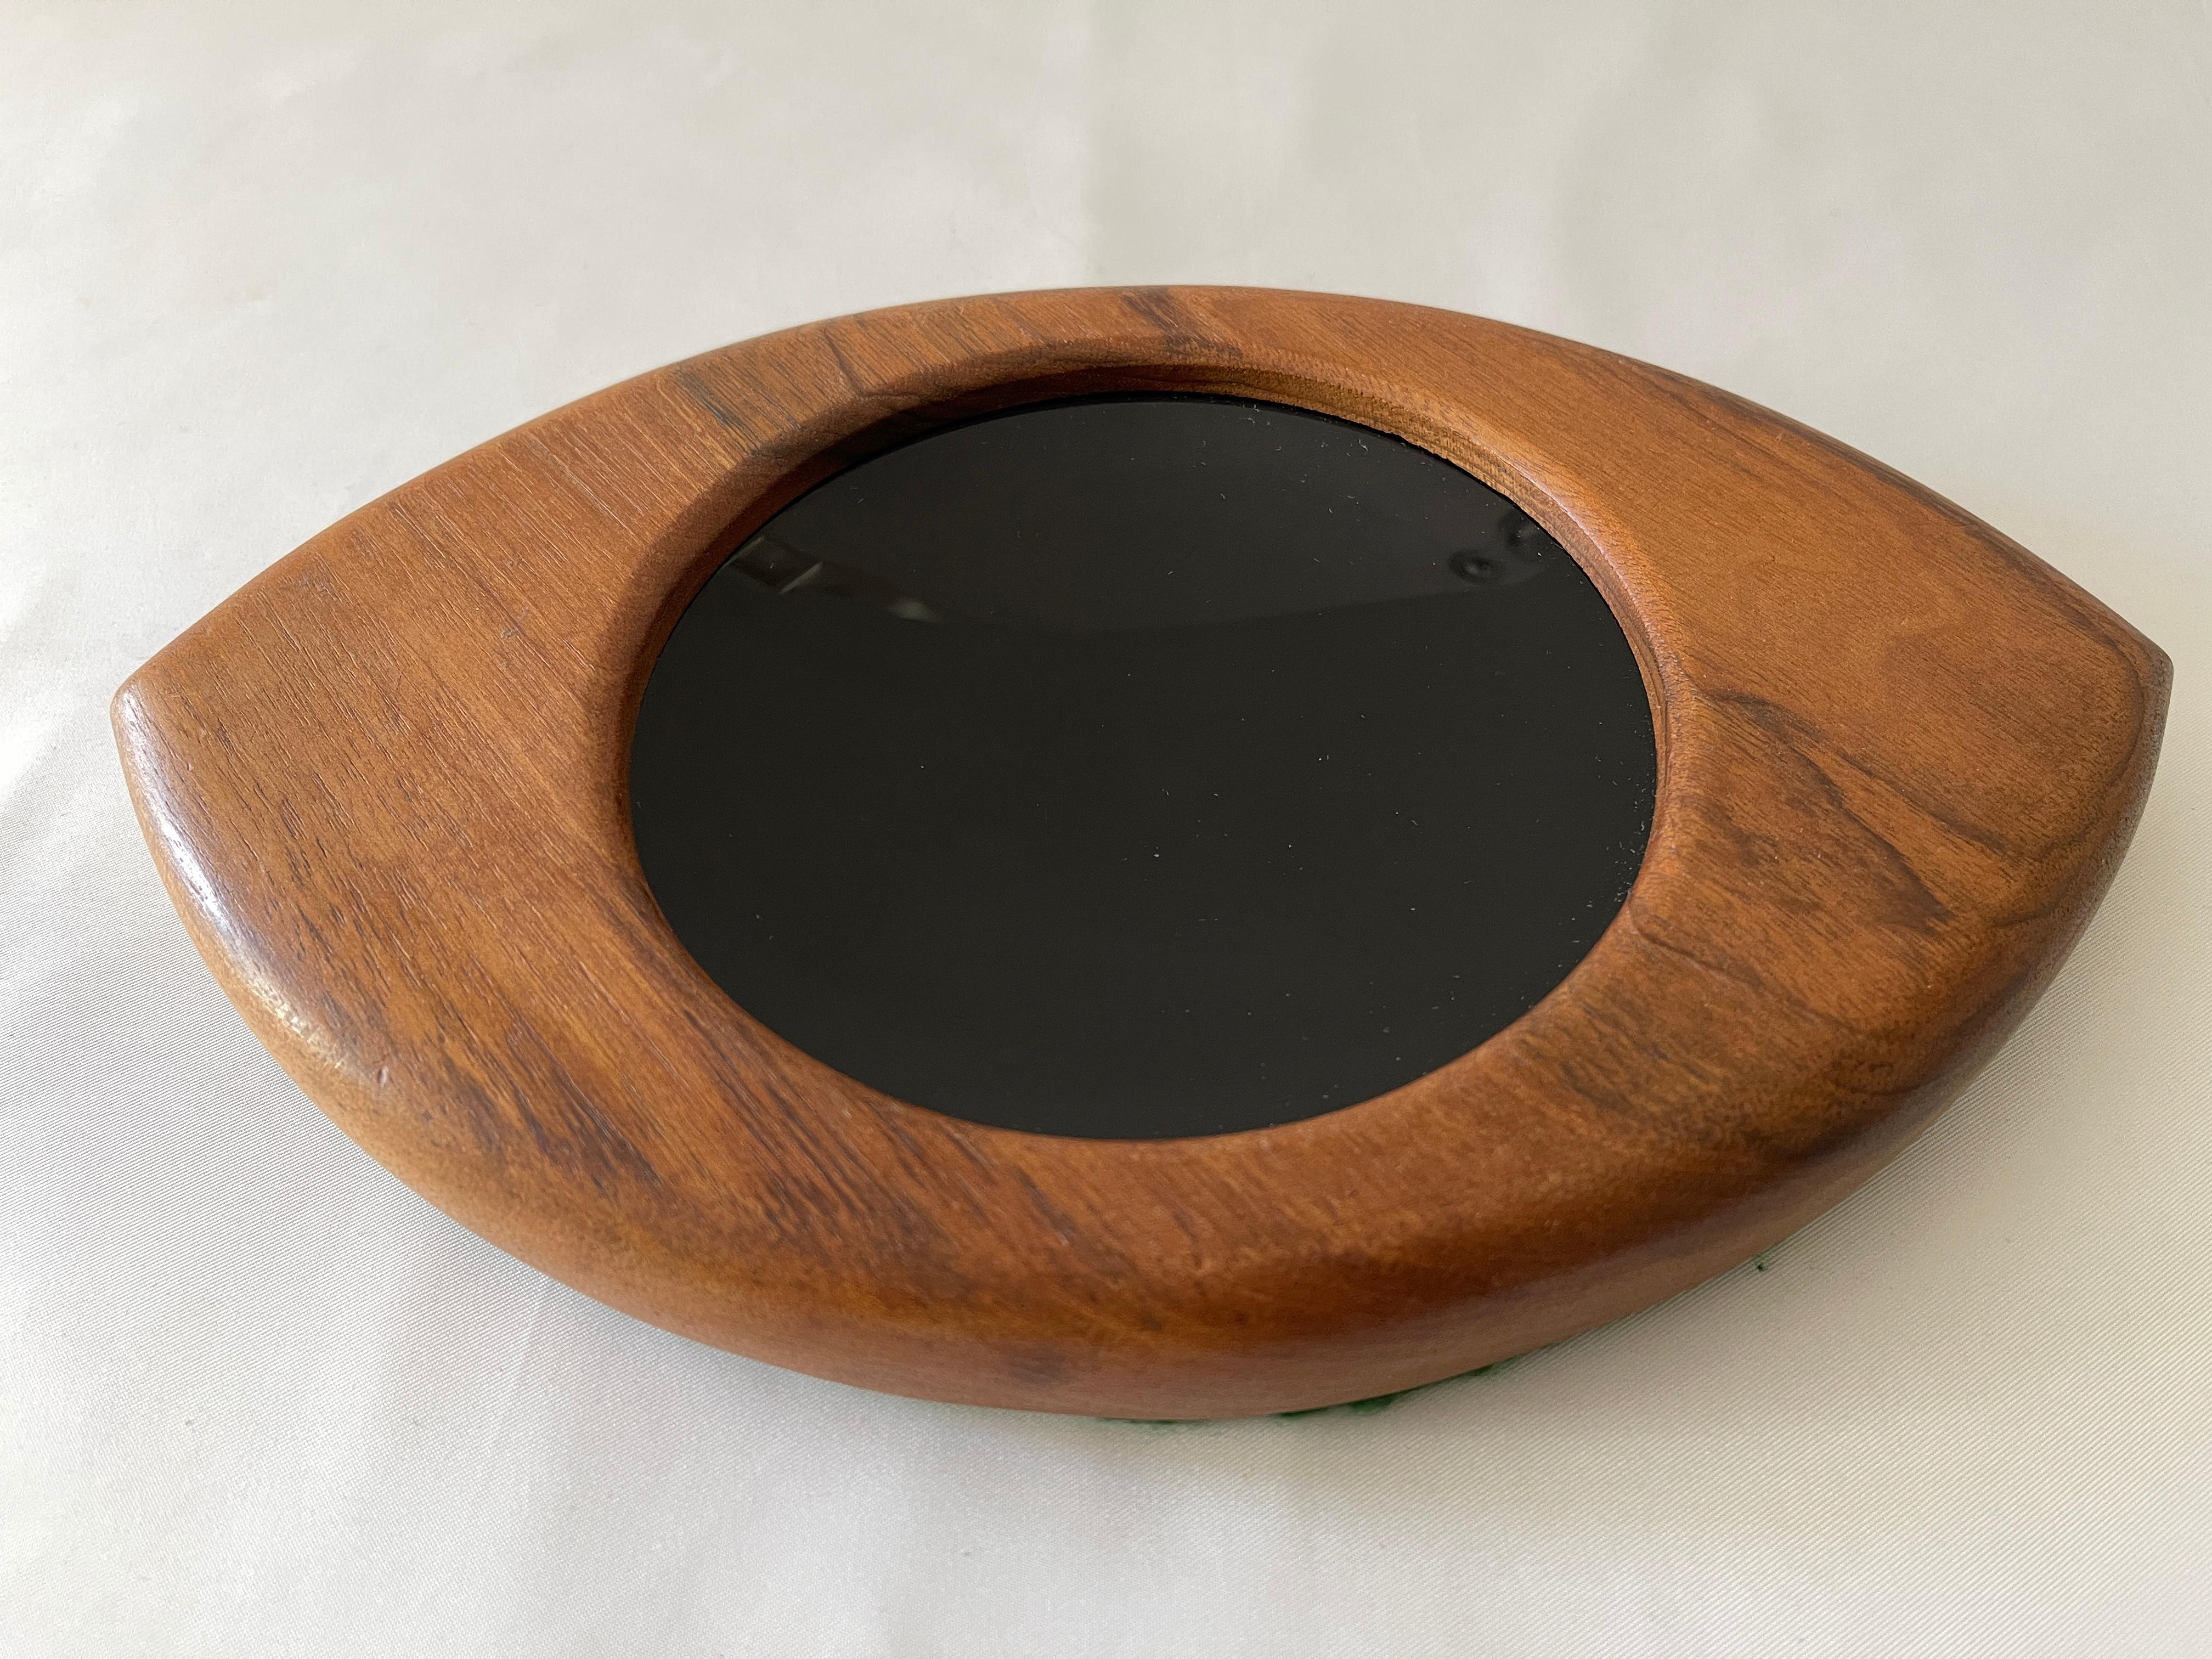 Danish modern eye shape Op Art teak wood dresser tray with black convex lucite center, and felt covered bottom. Convex lucite center measures 4.75